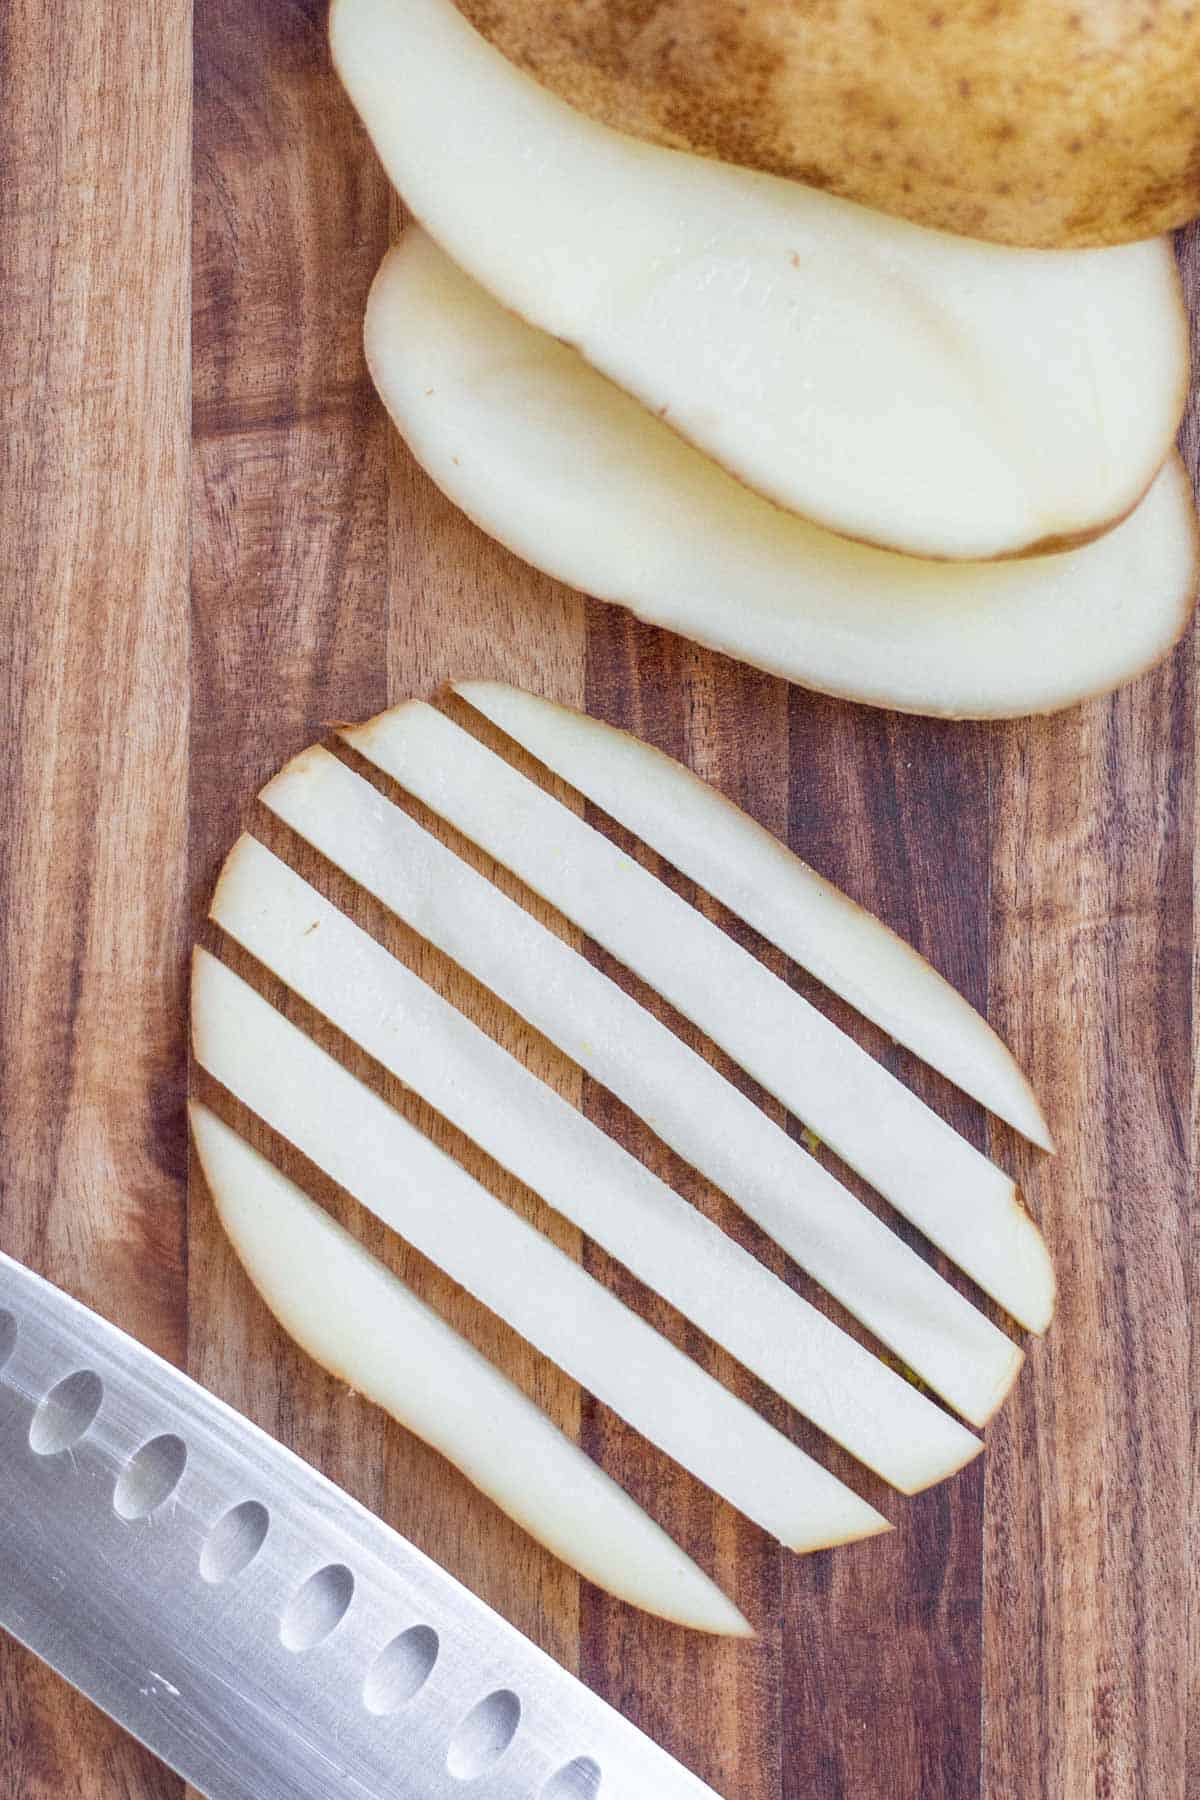 A thin horizontal potato slice cut into half-inch potato sticks to make French fries.